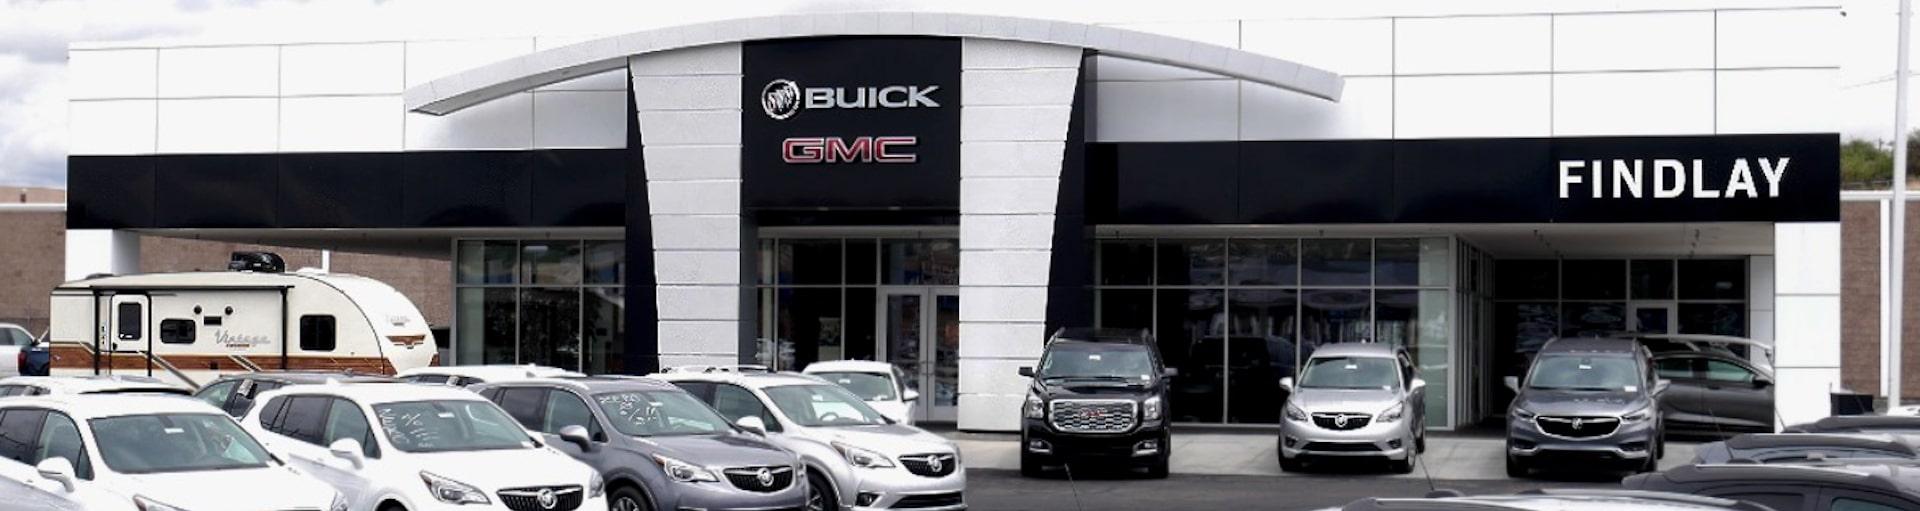 Findlay Buick GMC Service